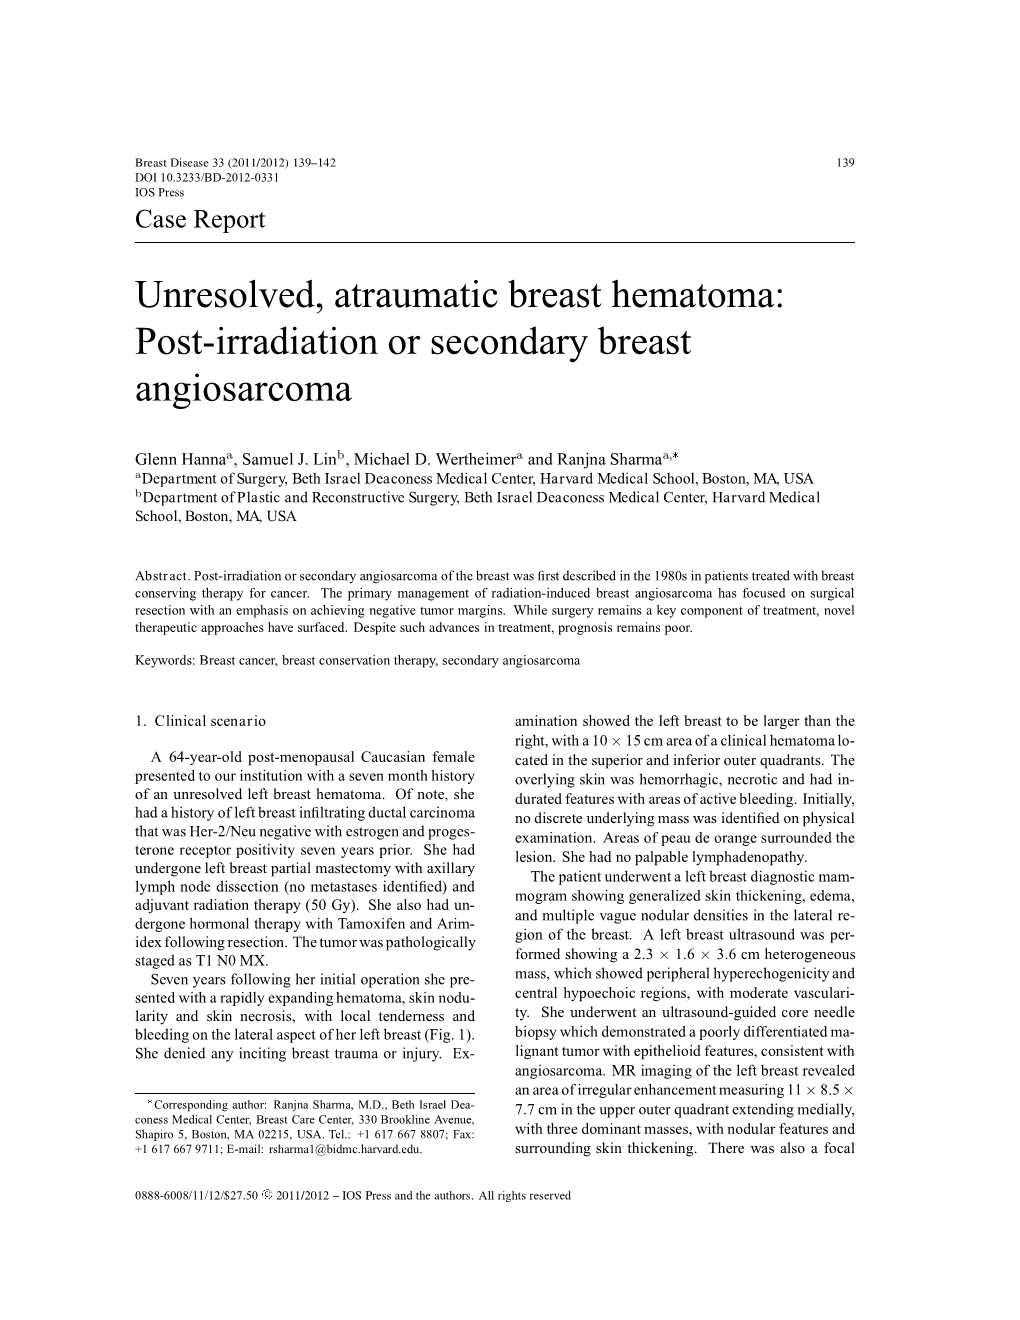 Unresolved, Atraumatic Breast Hematoma: Post-Irradiation Or Secondary Breast Angiosarcoma